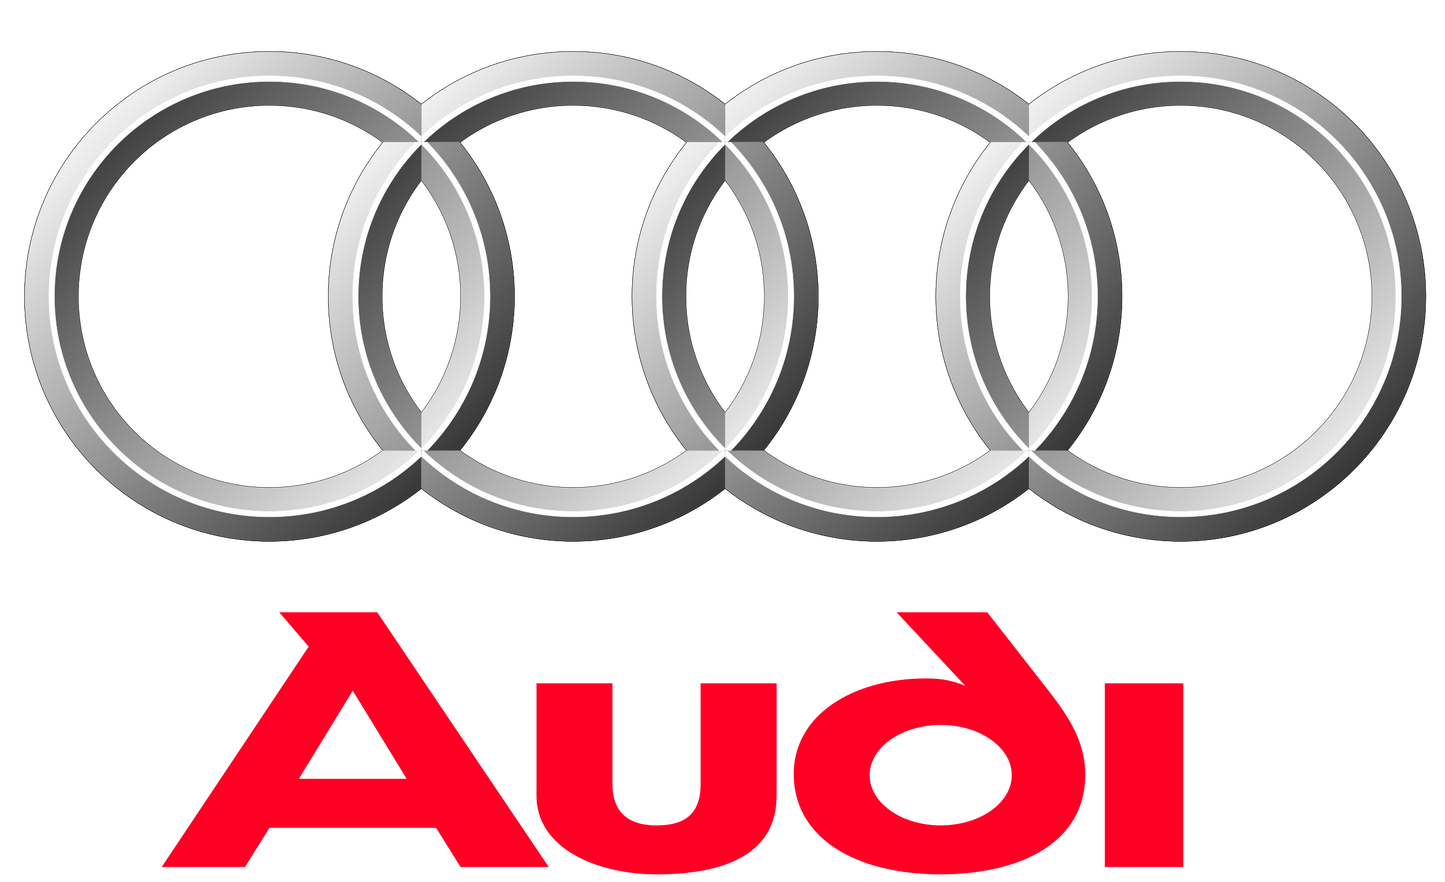 Codice autoradio Audi Navigation Plus